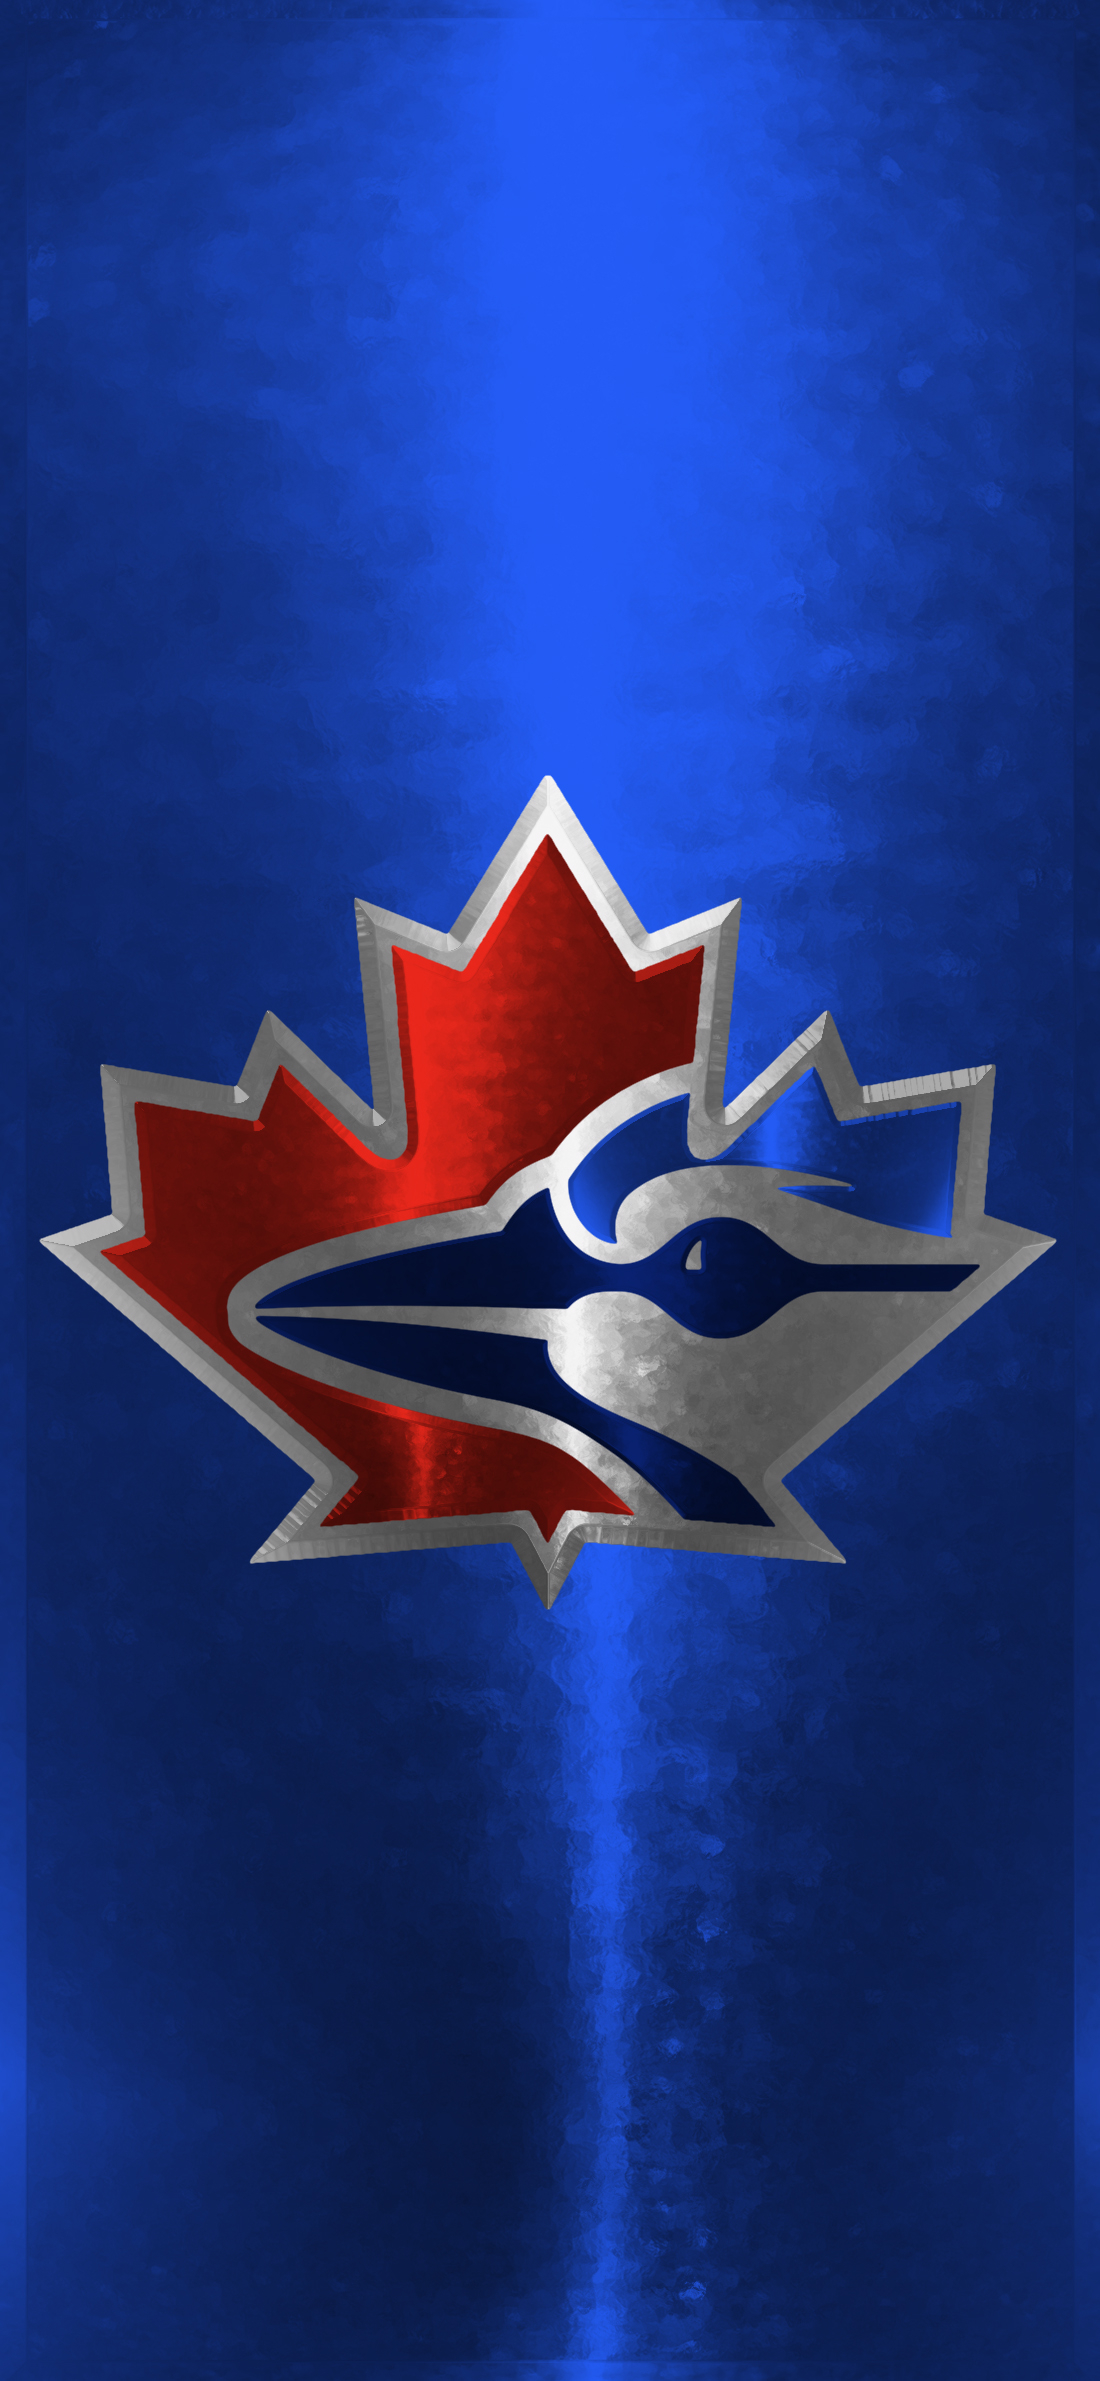 1100x2381 Toronto Blue Jays Spring Training Logo Phone Wallpaper Album on Imgur